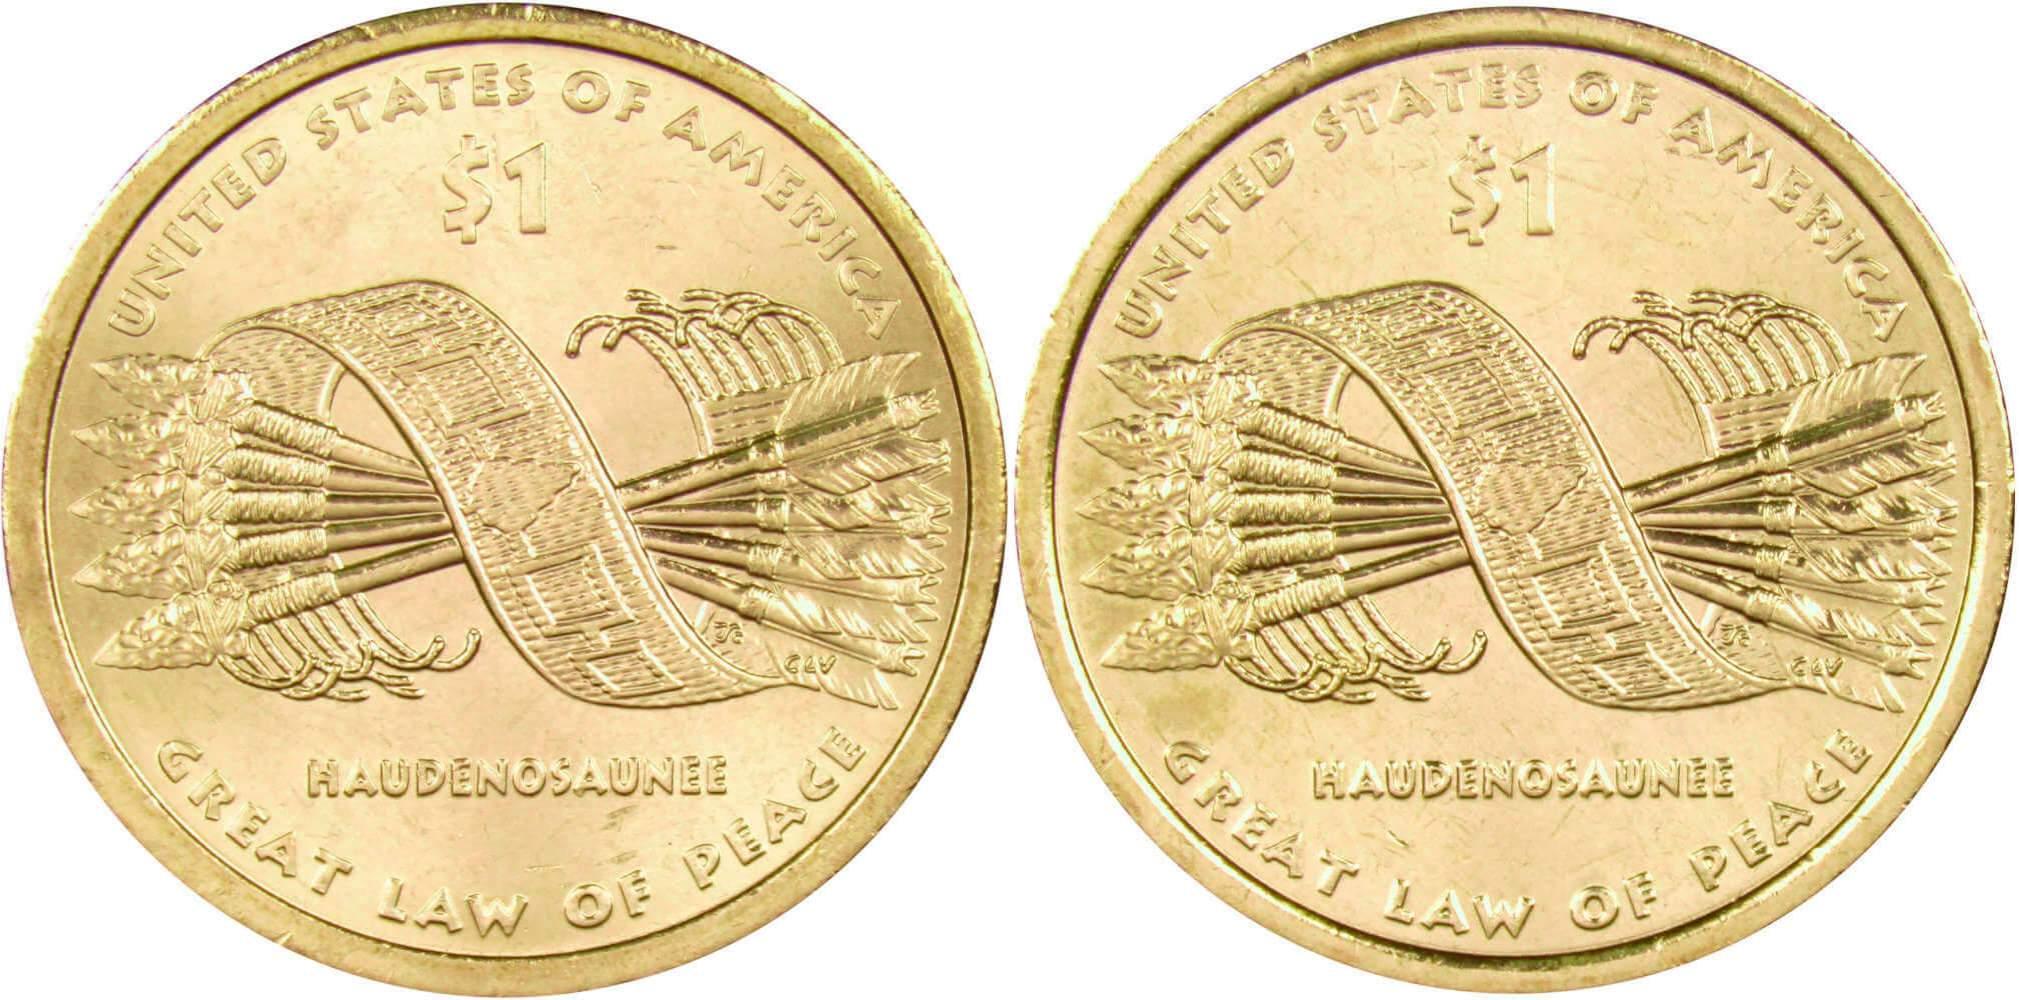 2010 Native American $1 Coin